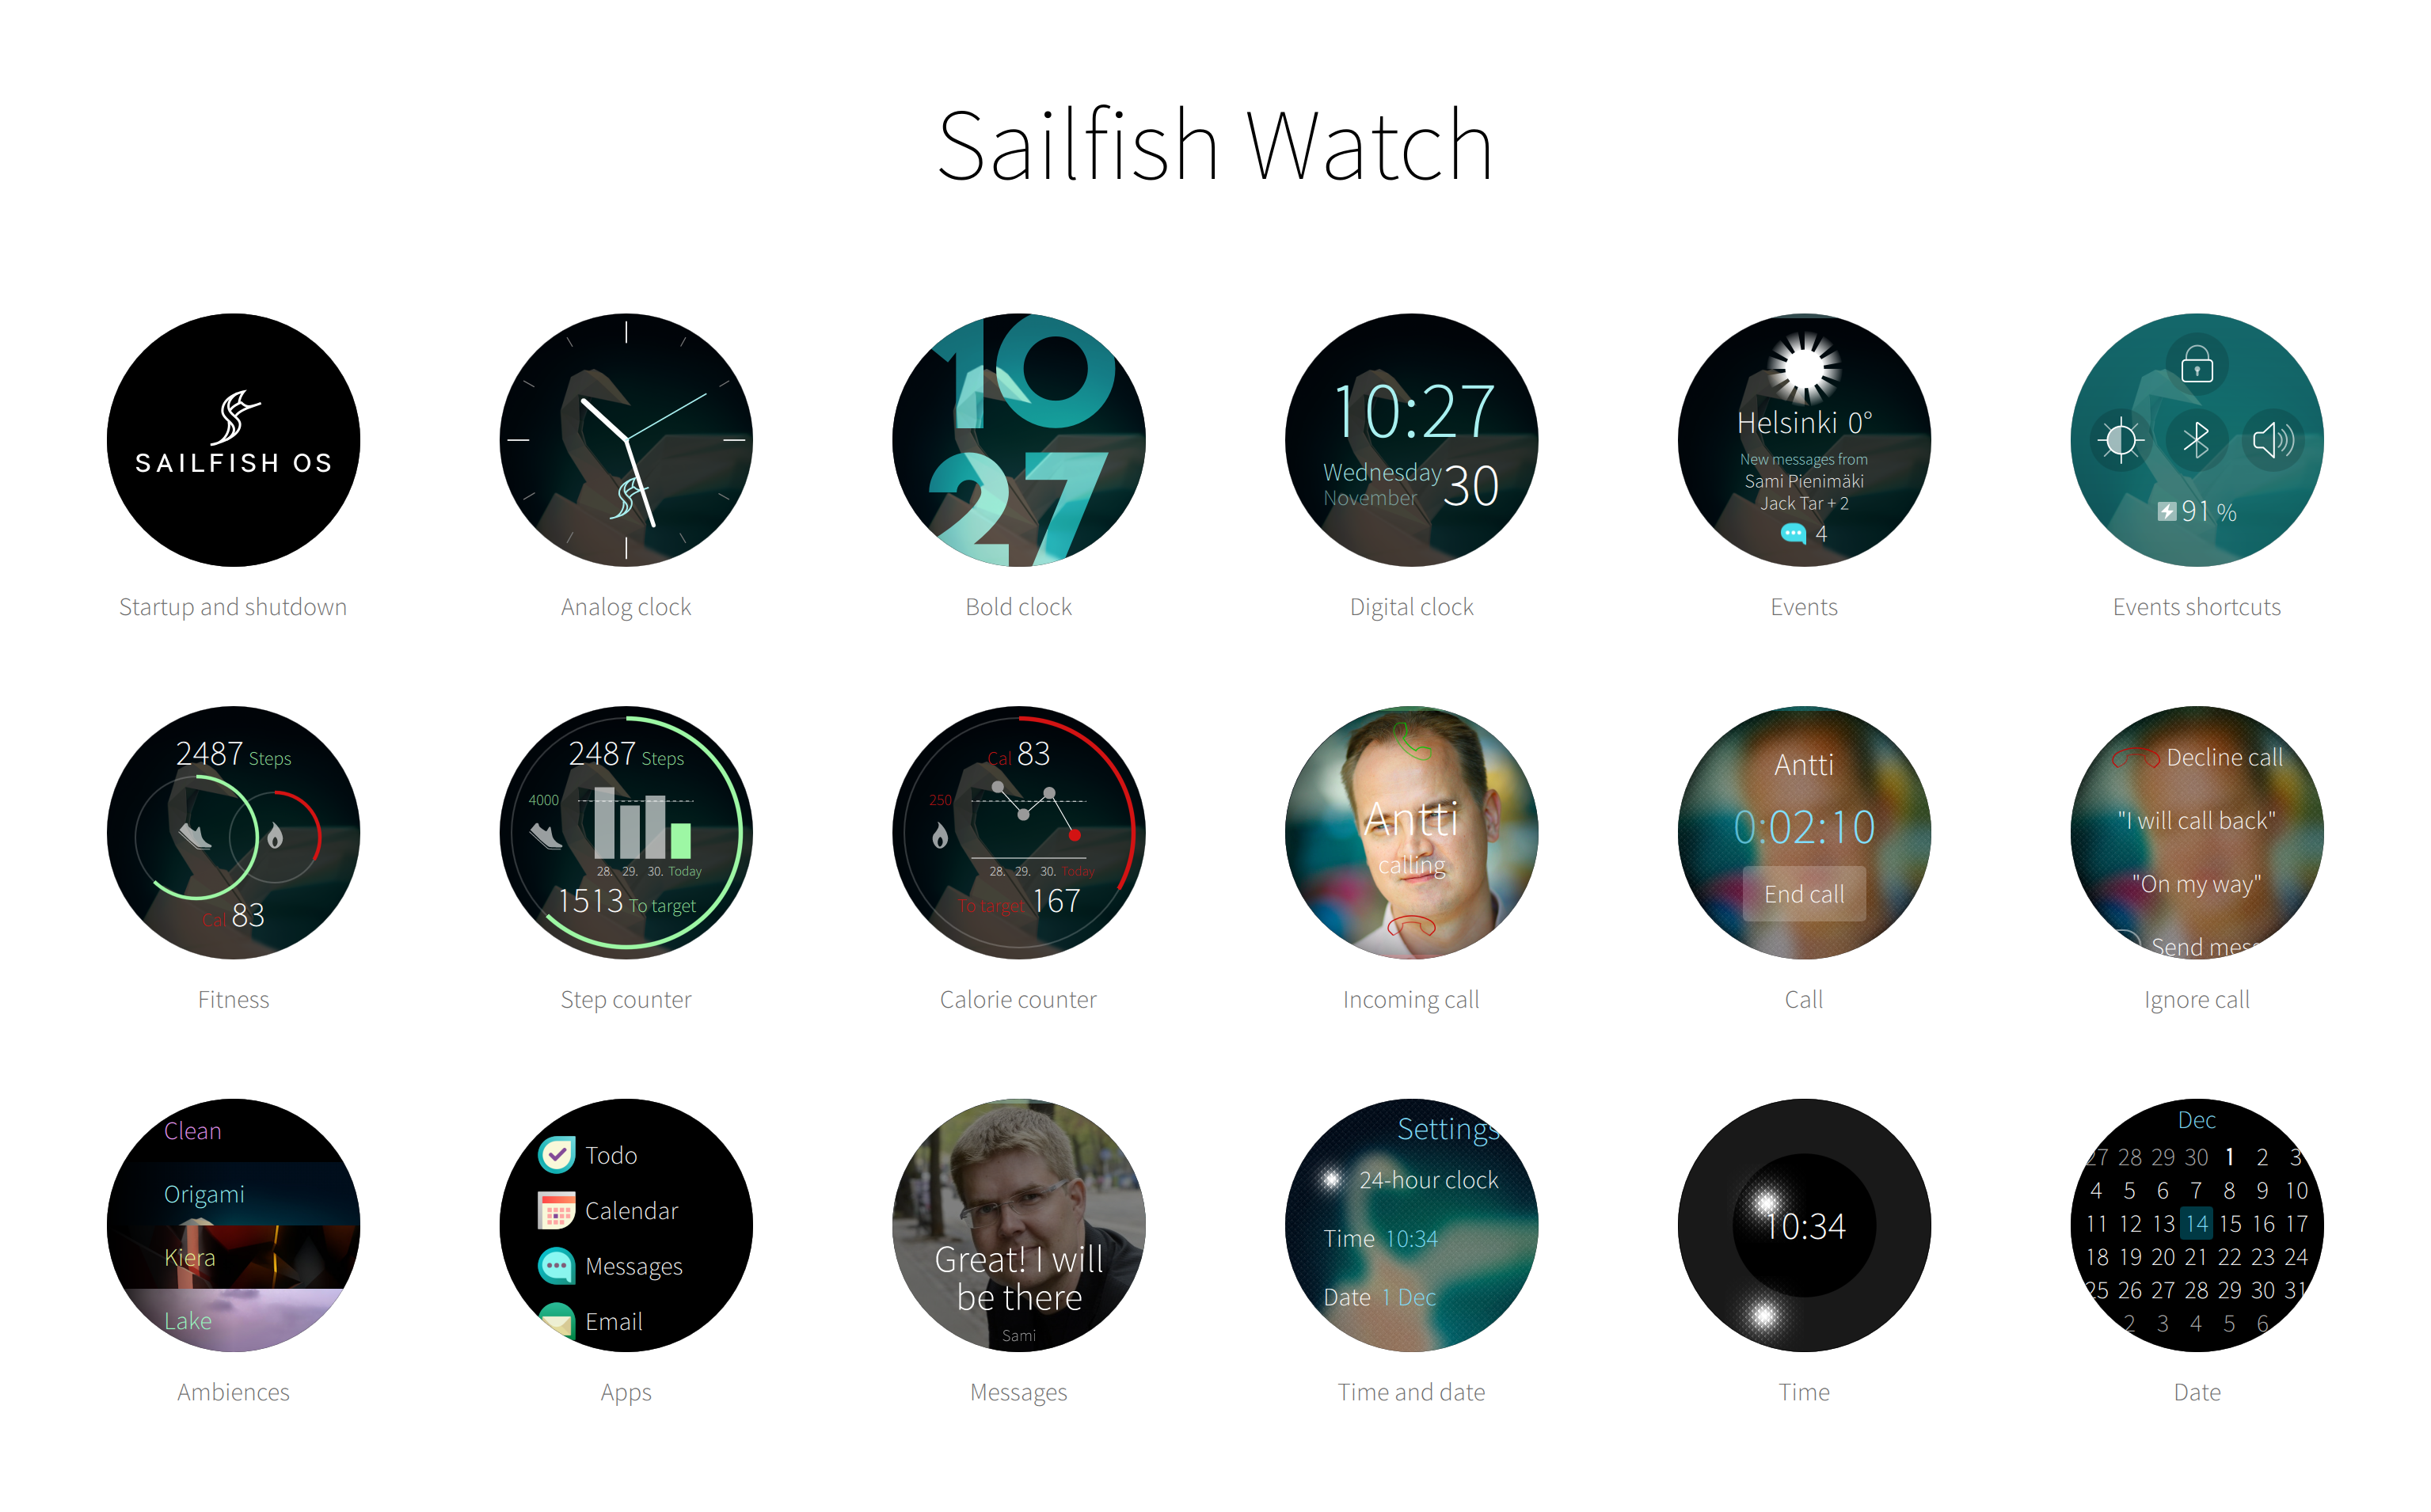 Sailfish Watch